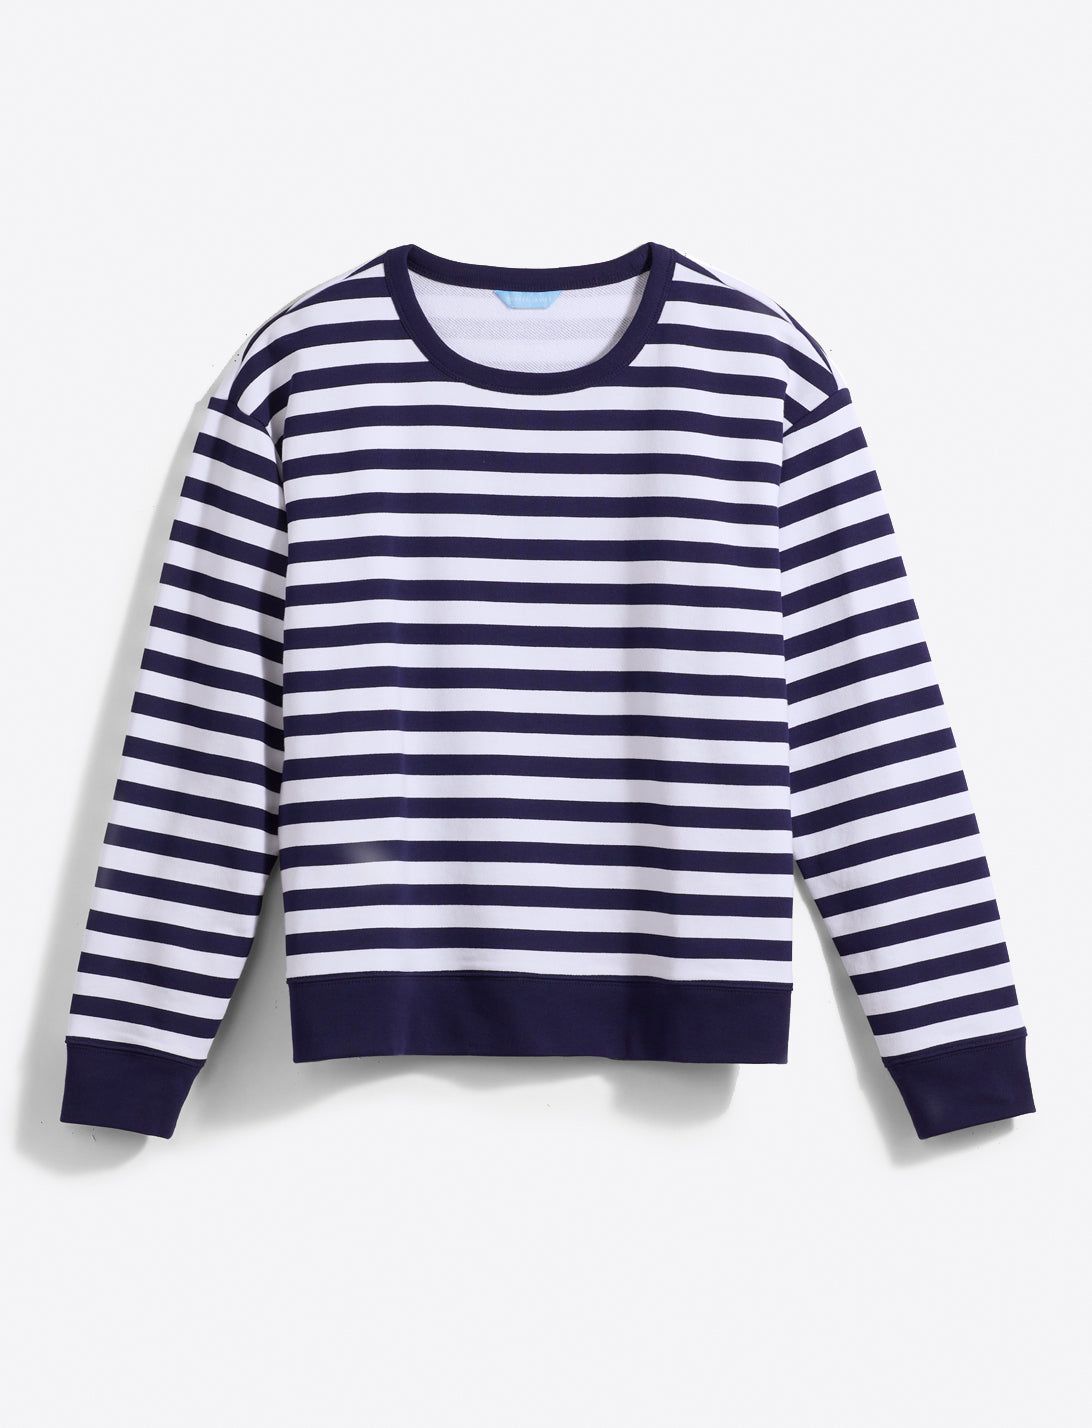 Kelsea Sweatshirt in Awning Stripe | Draper James (US)